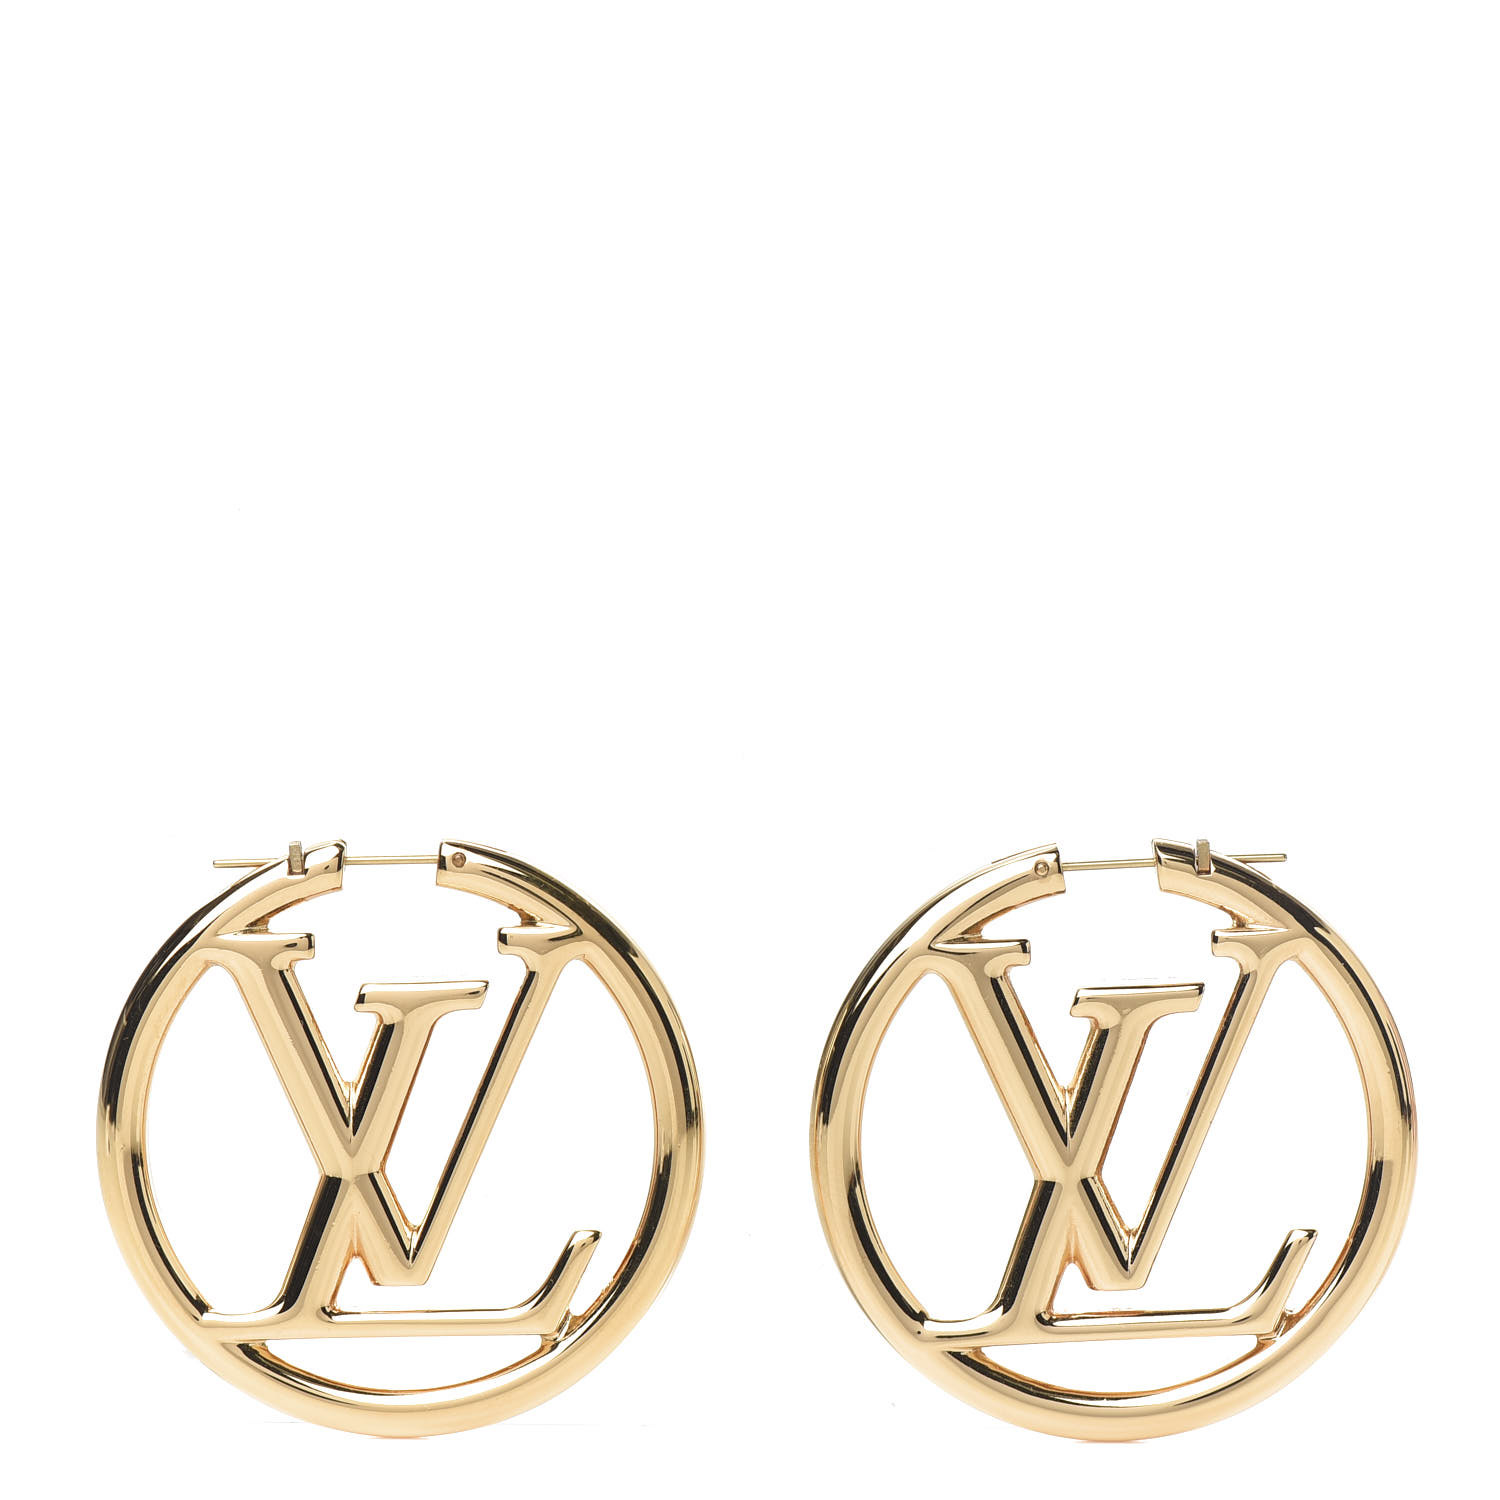 Louis Vuitton Lv Logo Earrings For Menu | The Art of Mike Mignola